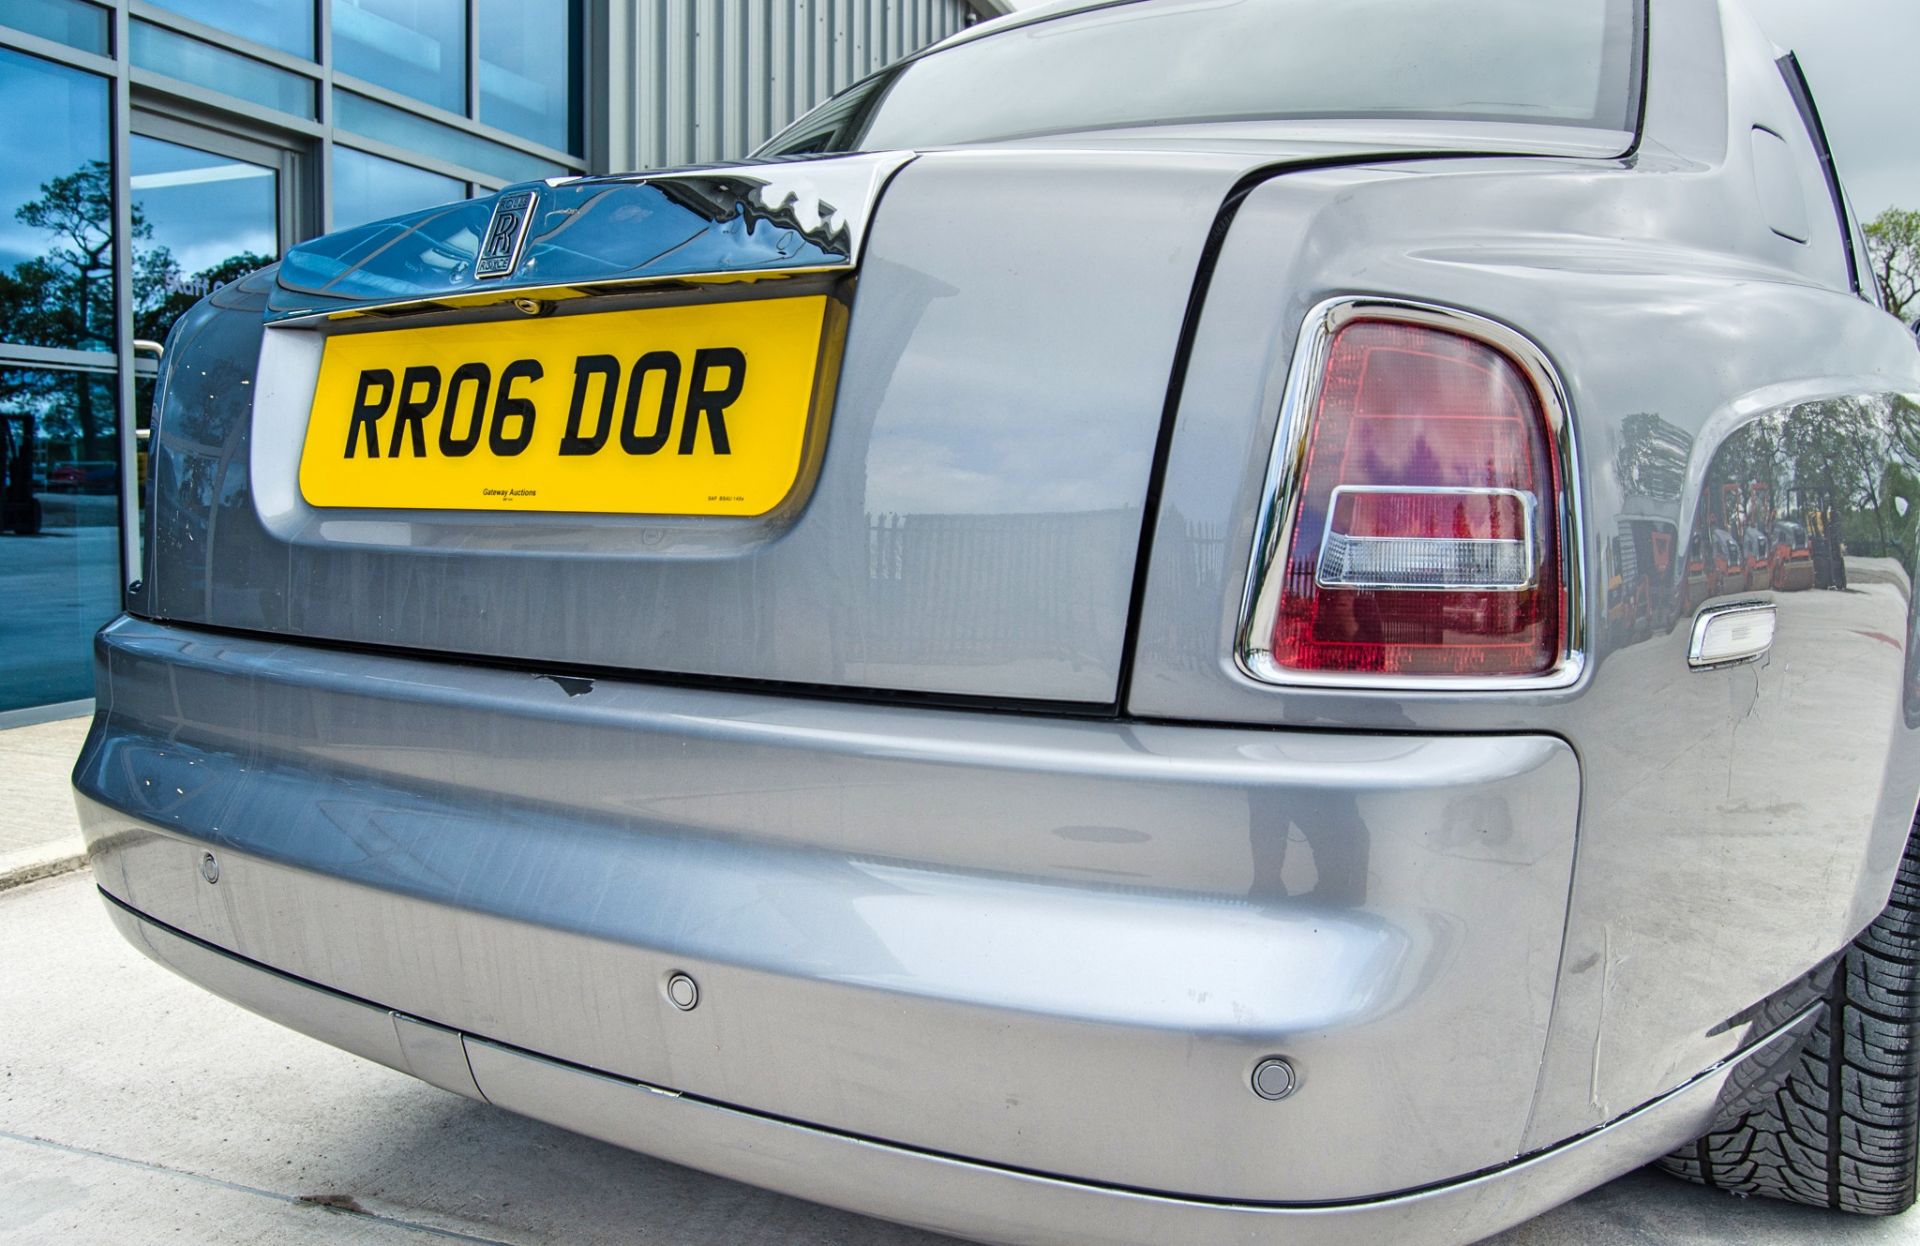 Rolls Royce Phantom 6749cc V12 Auto 4 door saloon car Registration Number: RR06 DOR Date of - Image 20 of 59